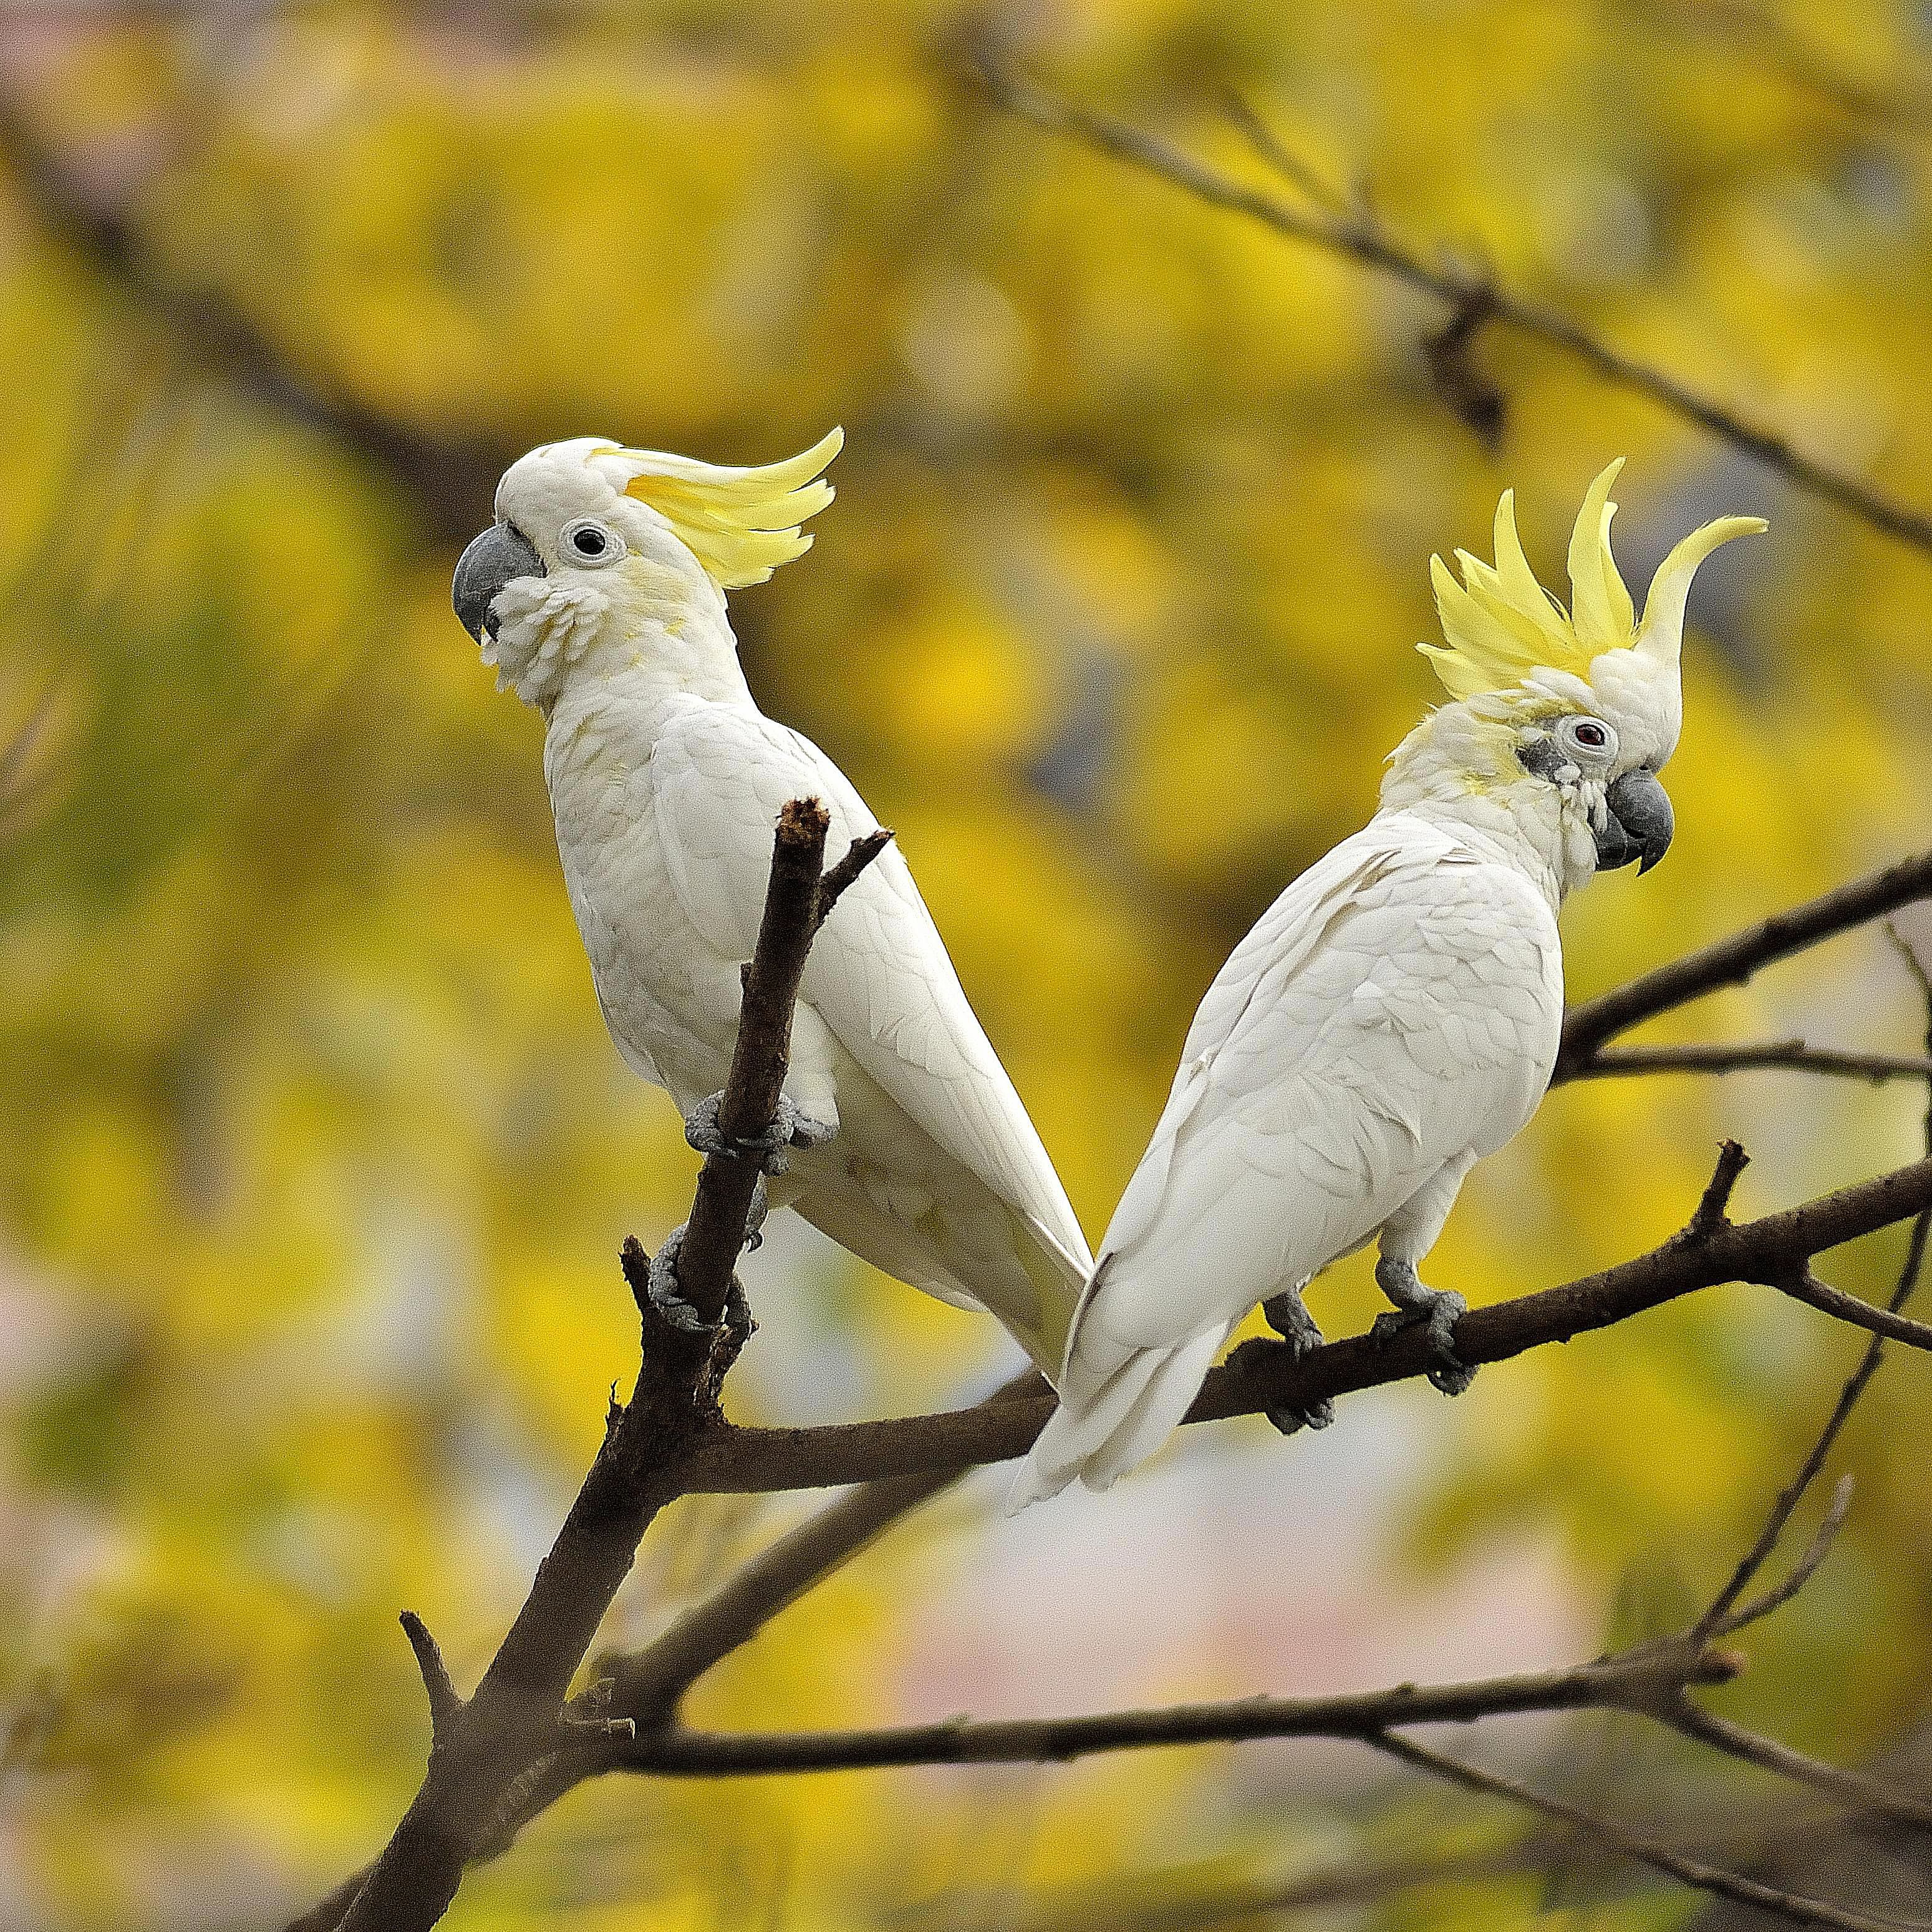 Cockatoo Pair With Crest Raised